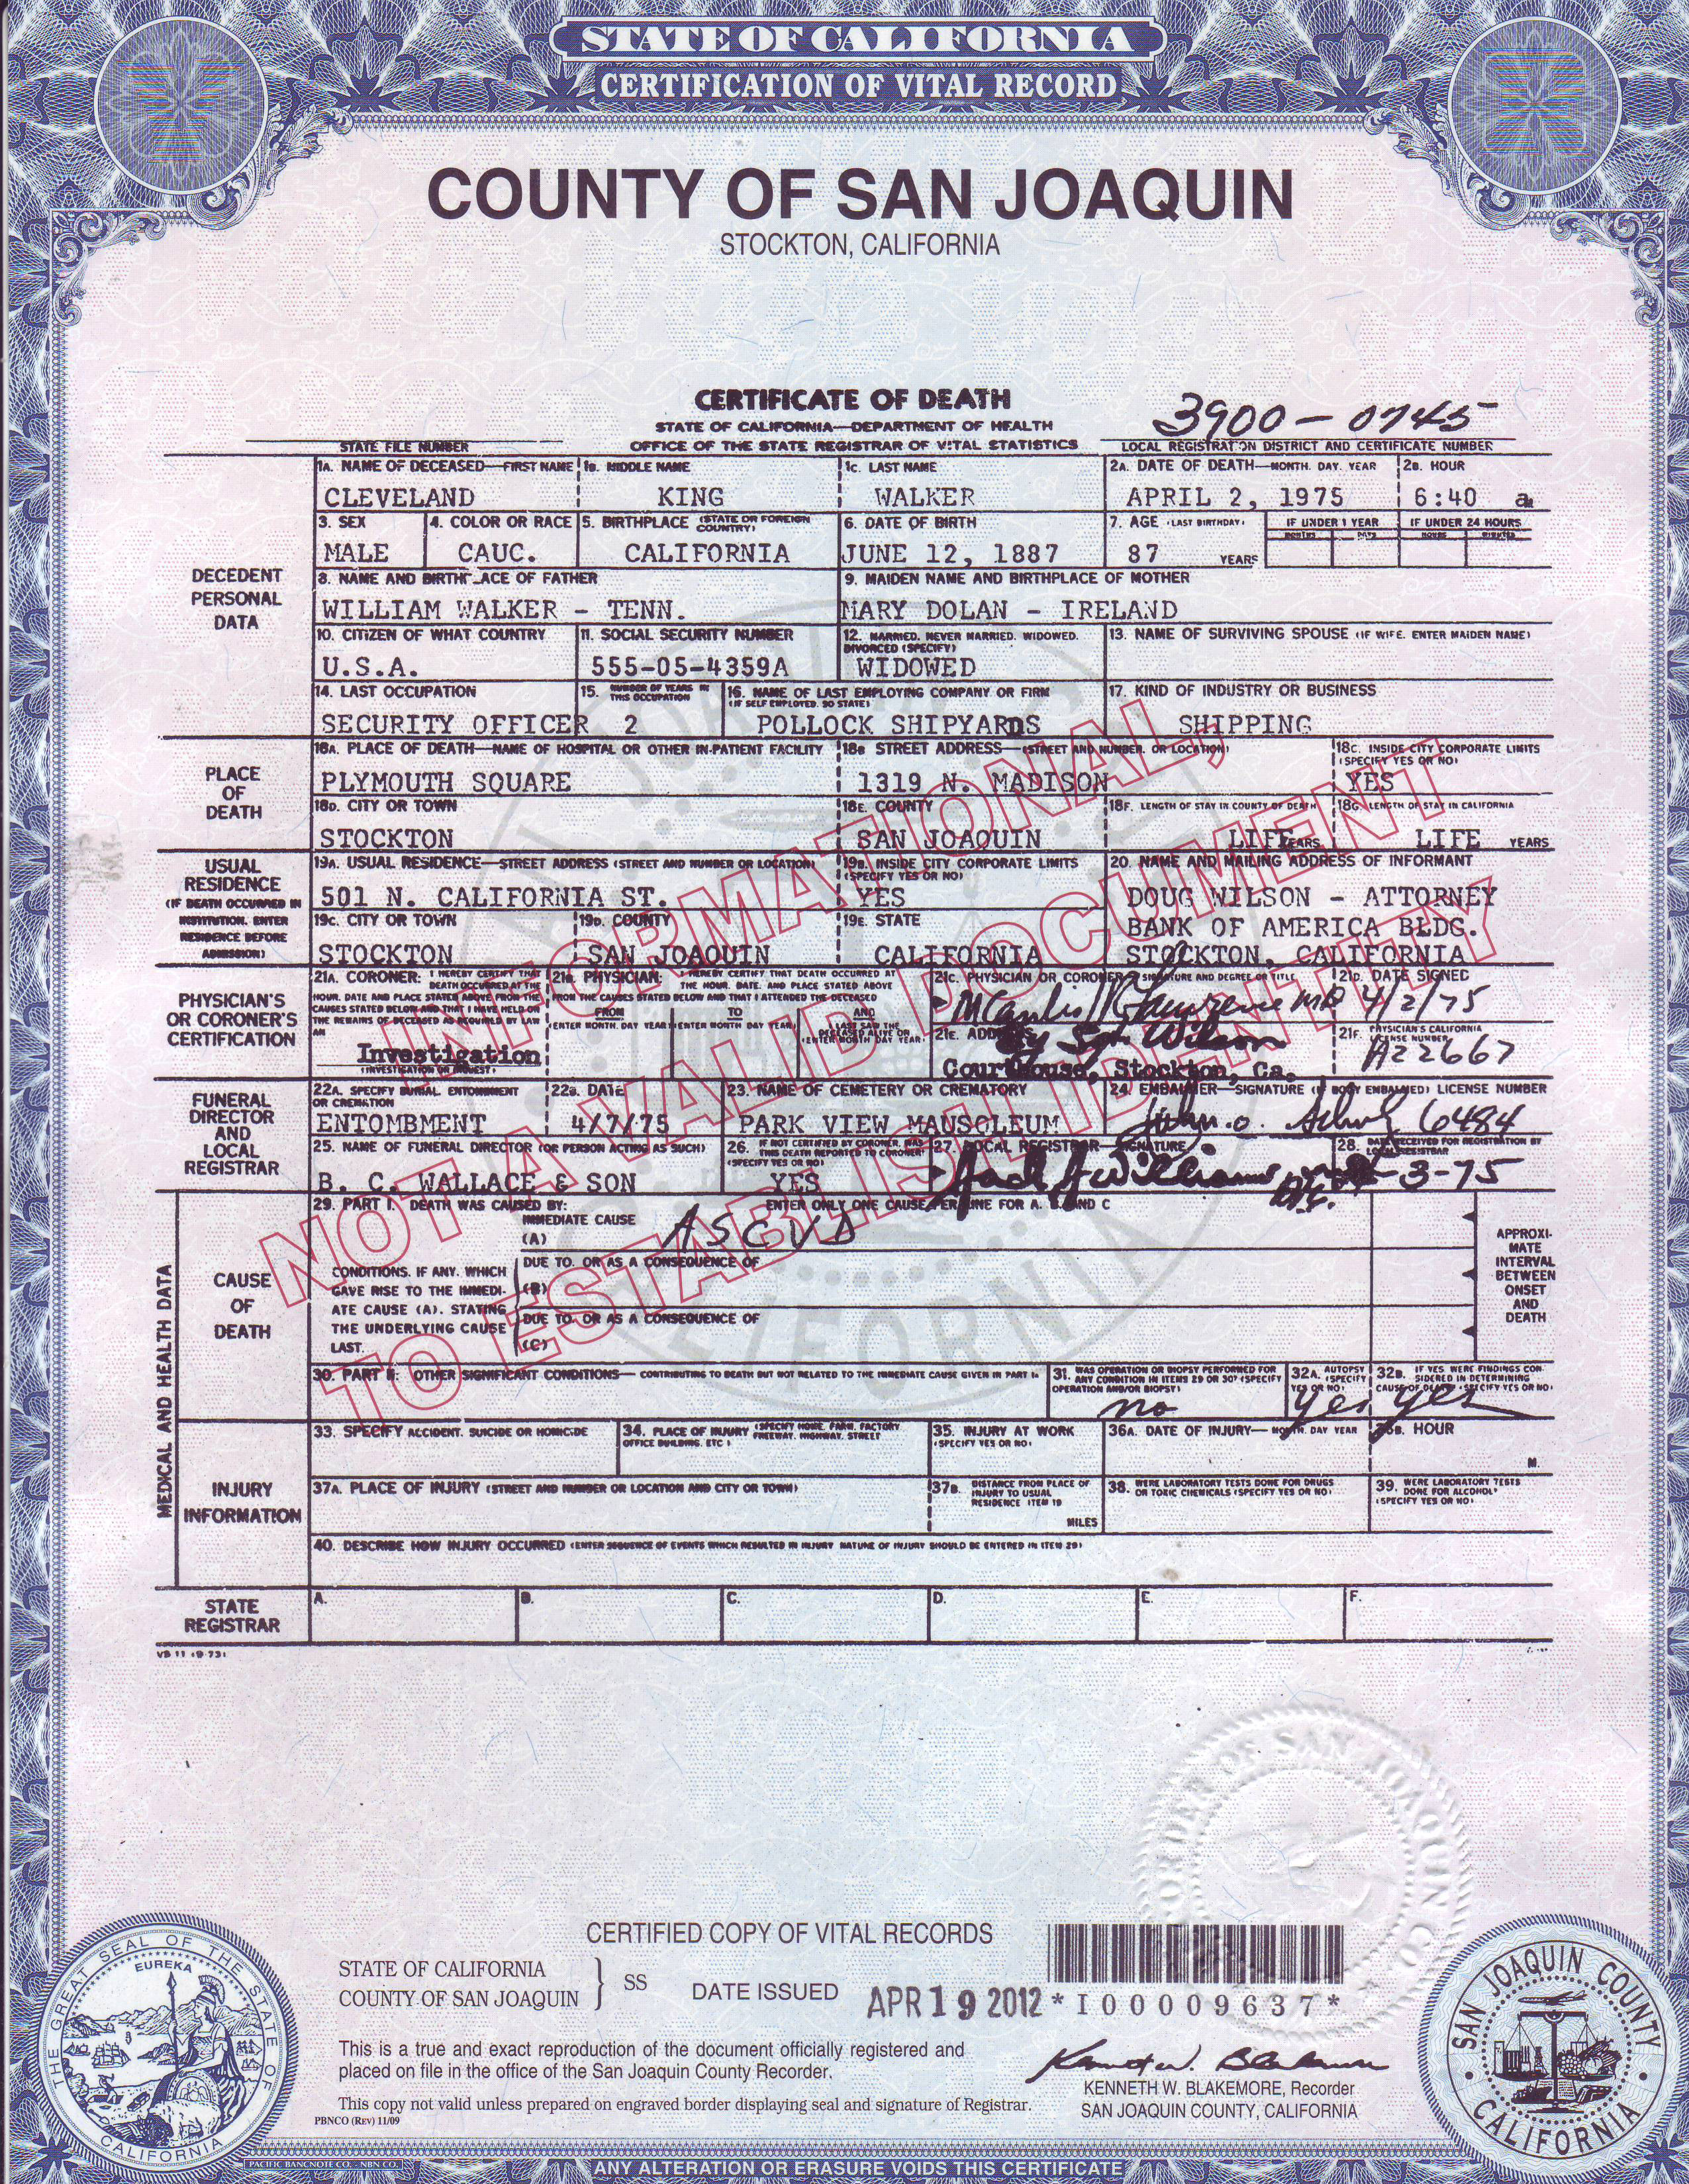 Cleveland King Walker, death certificate, 1975, San Joaquin County, California